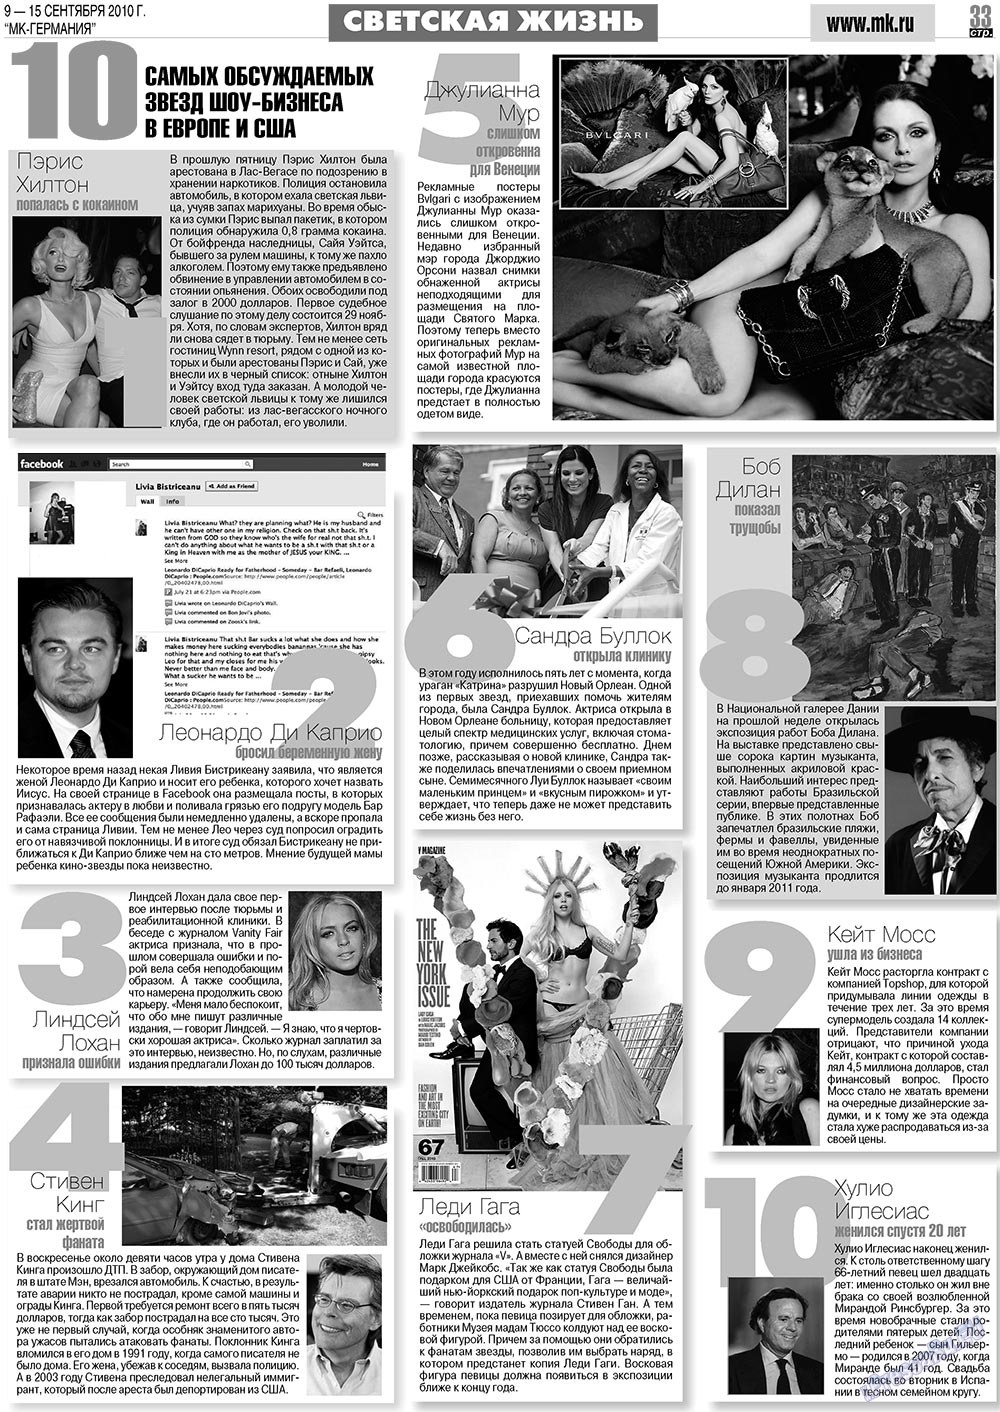 МК-Германия, газета. 2010 №37 стр.33